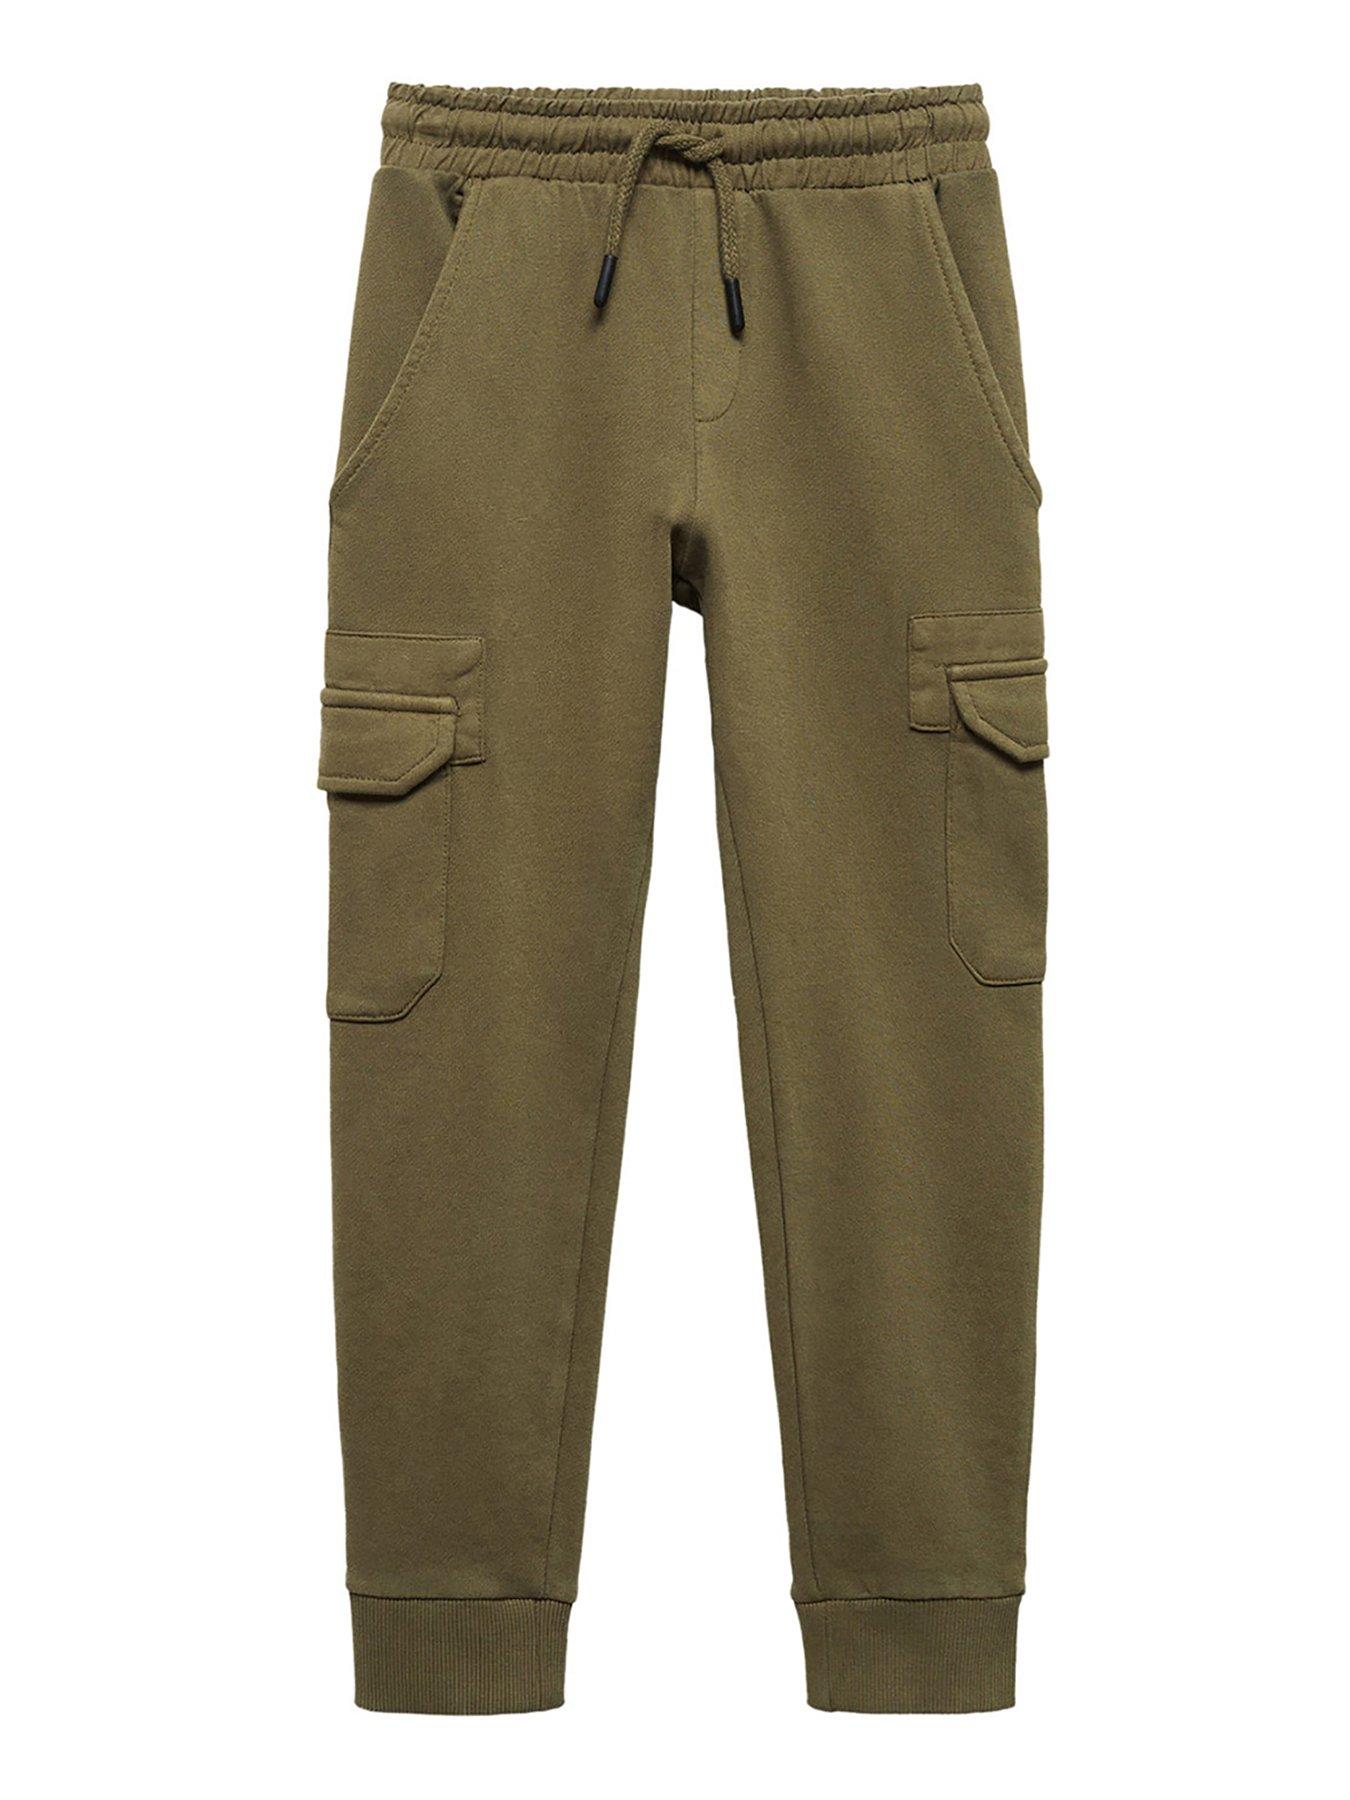 CK-1998 Fashion Cargo Pants Jogger Pants 6 Pocket Pants Unisex#CK